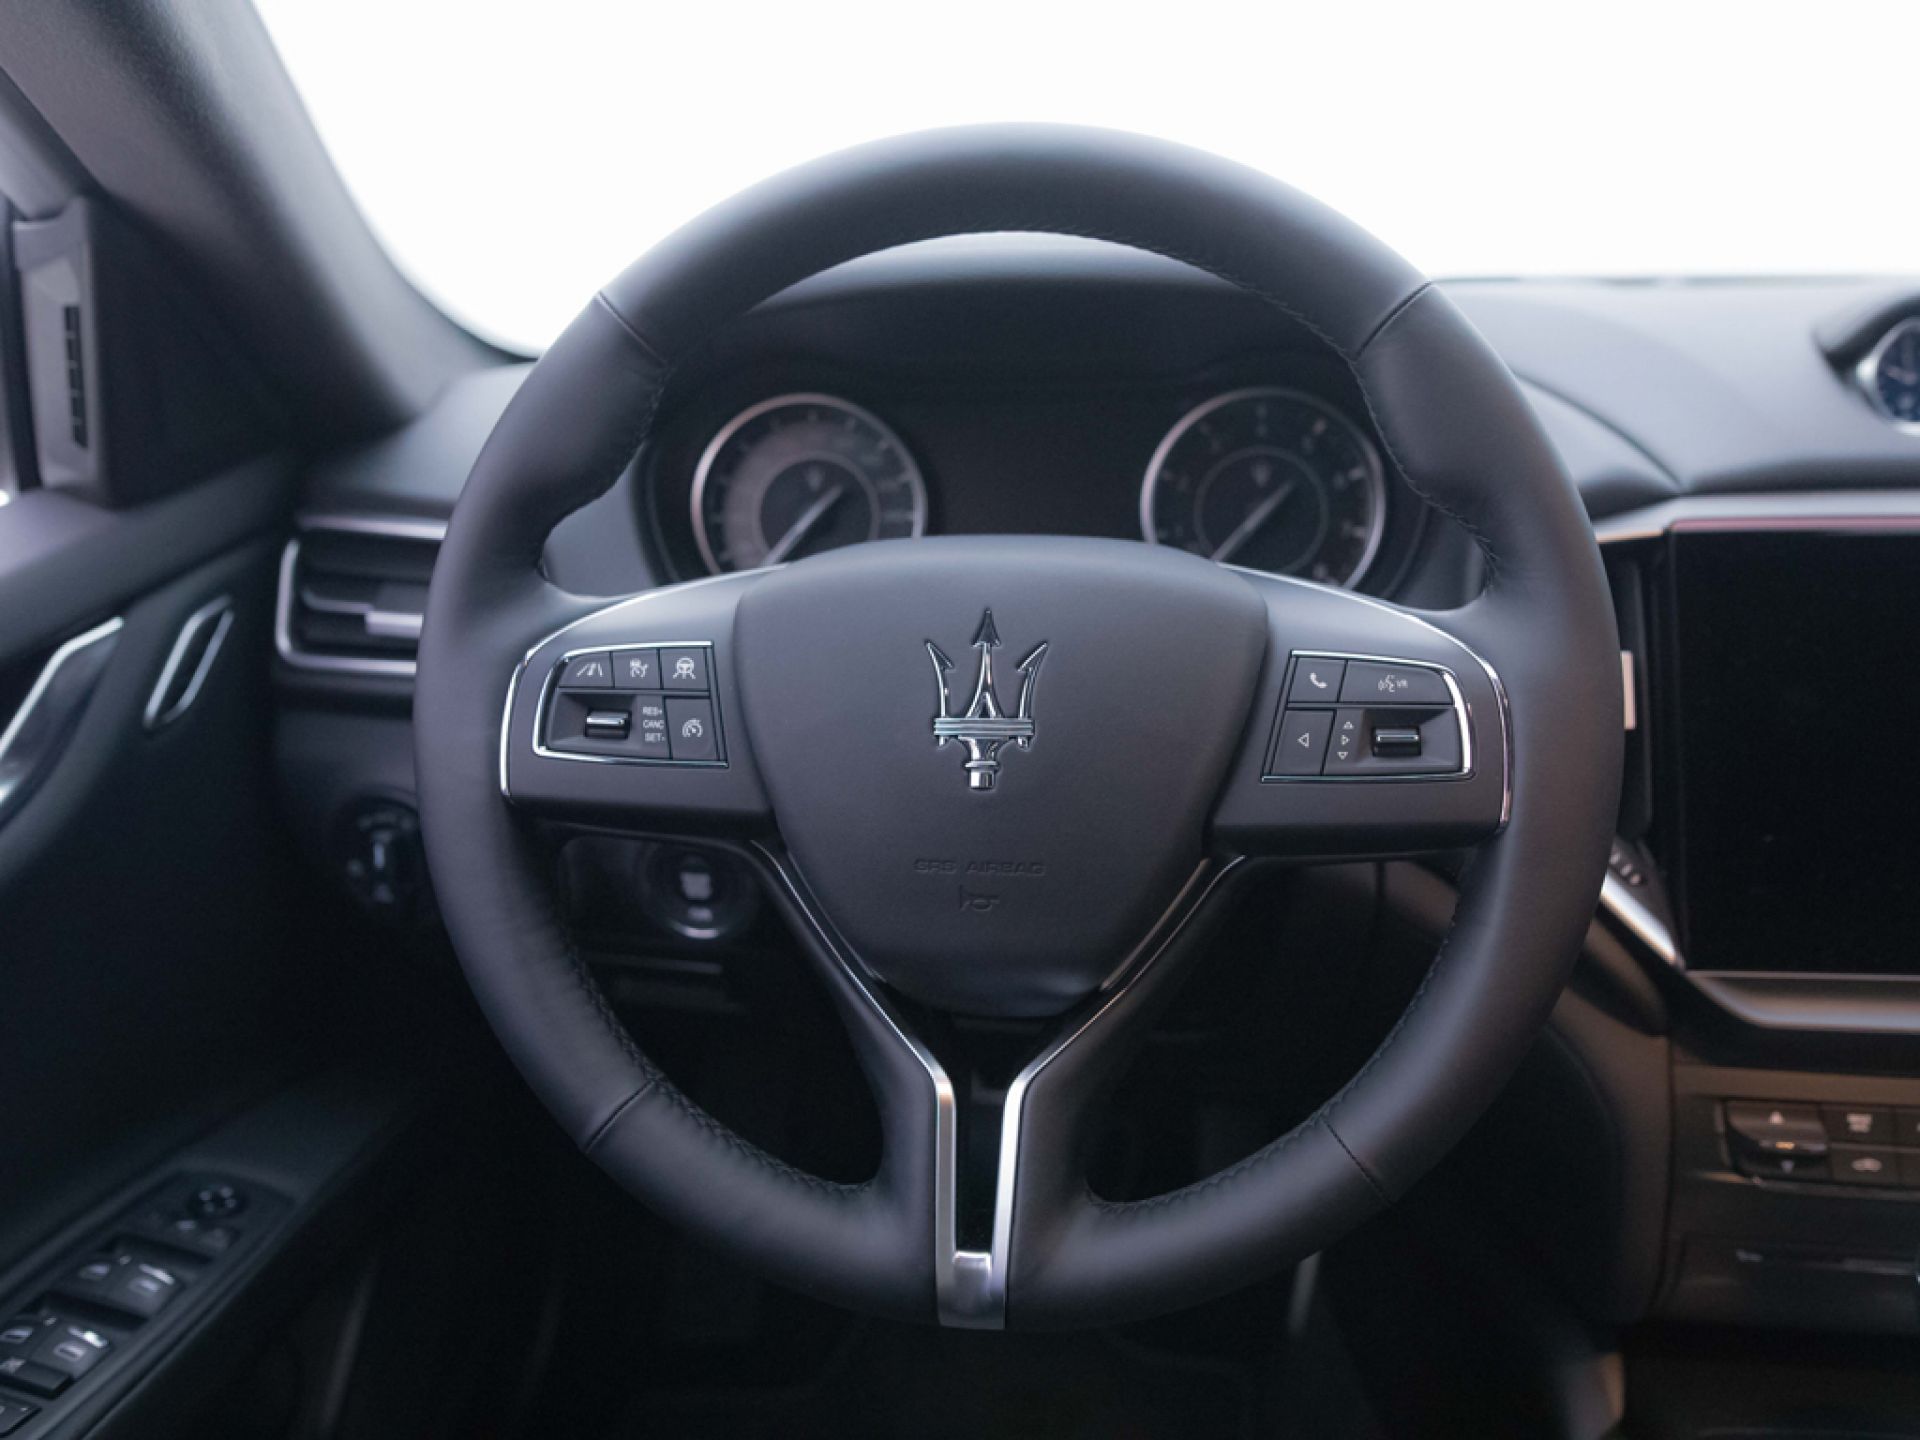 Maserati Ghibli 2.0 L4 Hybrid-Gasolina (330CV)